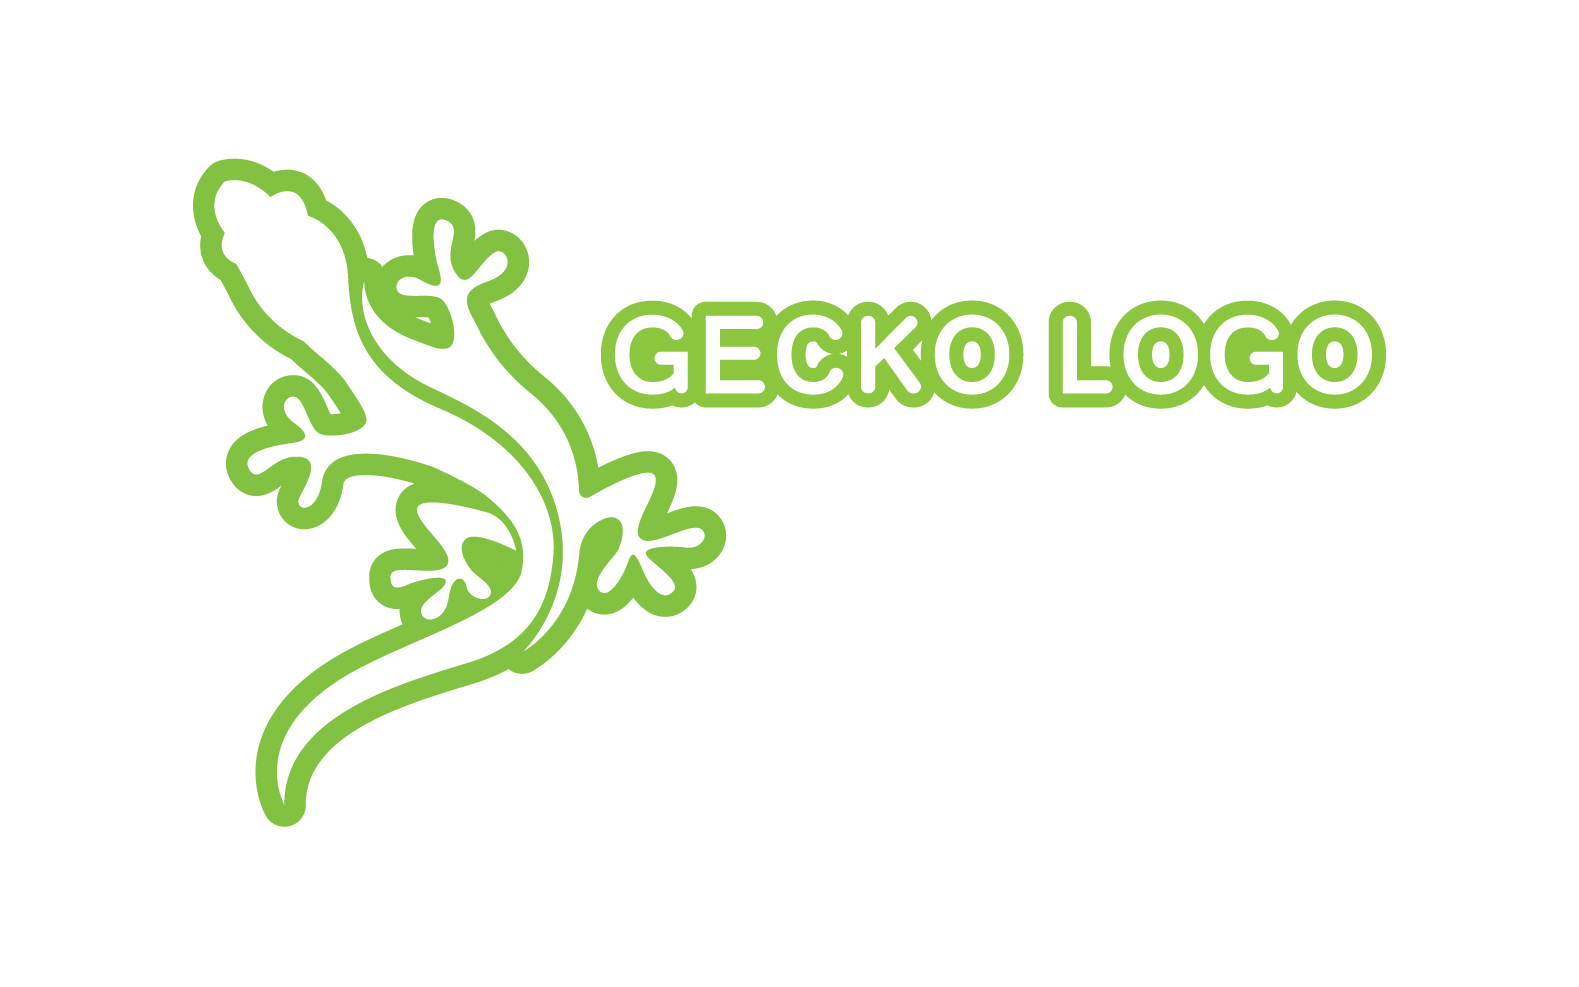 Lizard gecko animal reptil logo simple v27